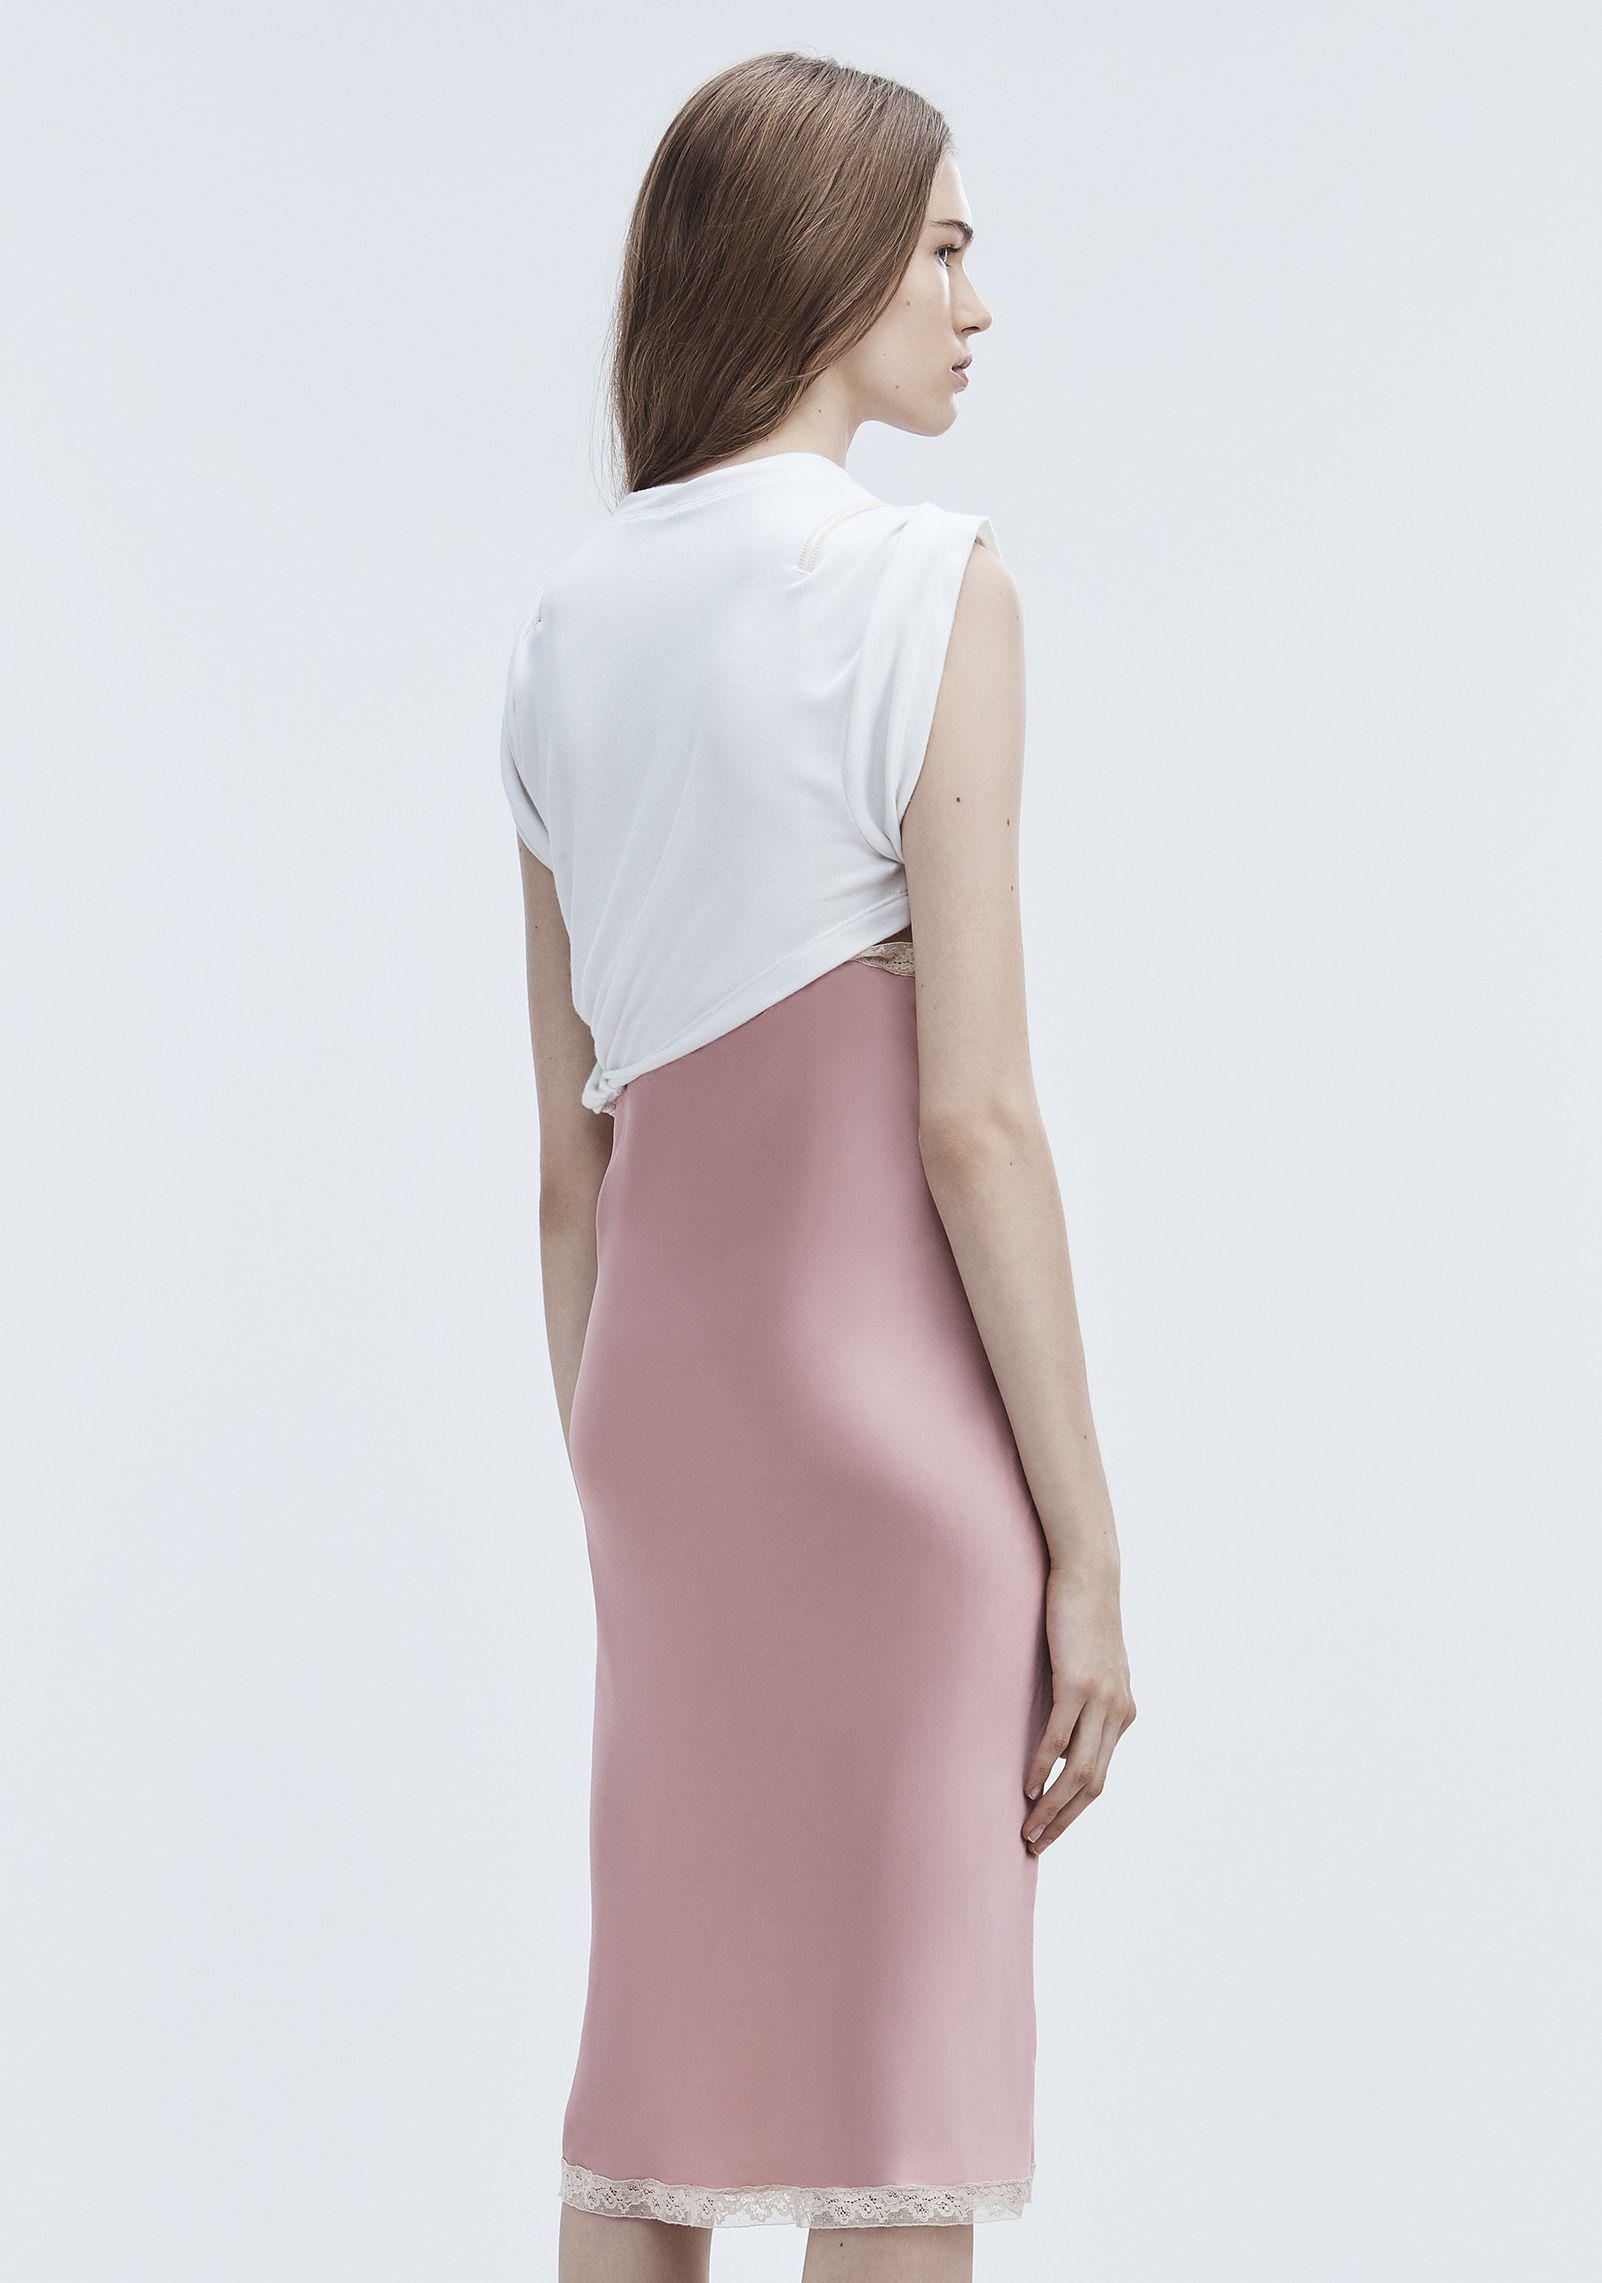 Alexander Wang Satin Hybrid Slip Dress in Pink - Lyst